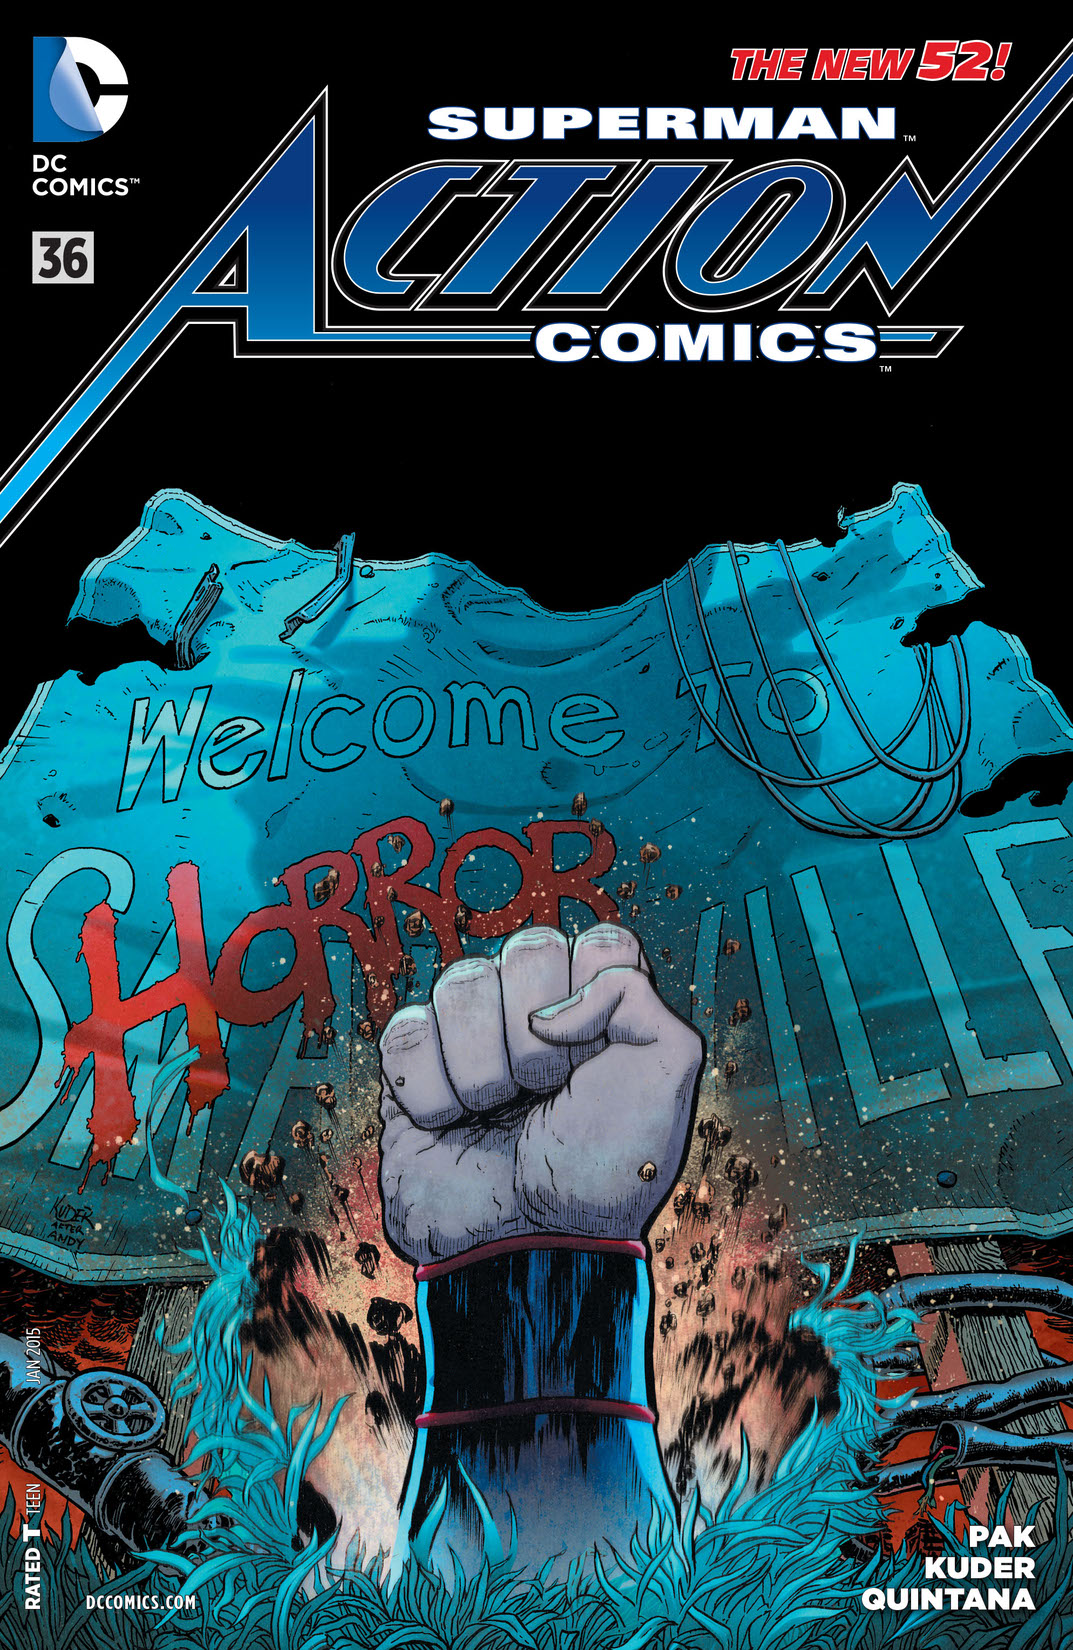 Action Comics (2011-) #36 preview images